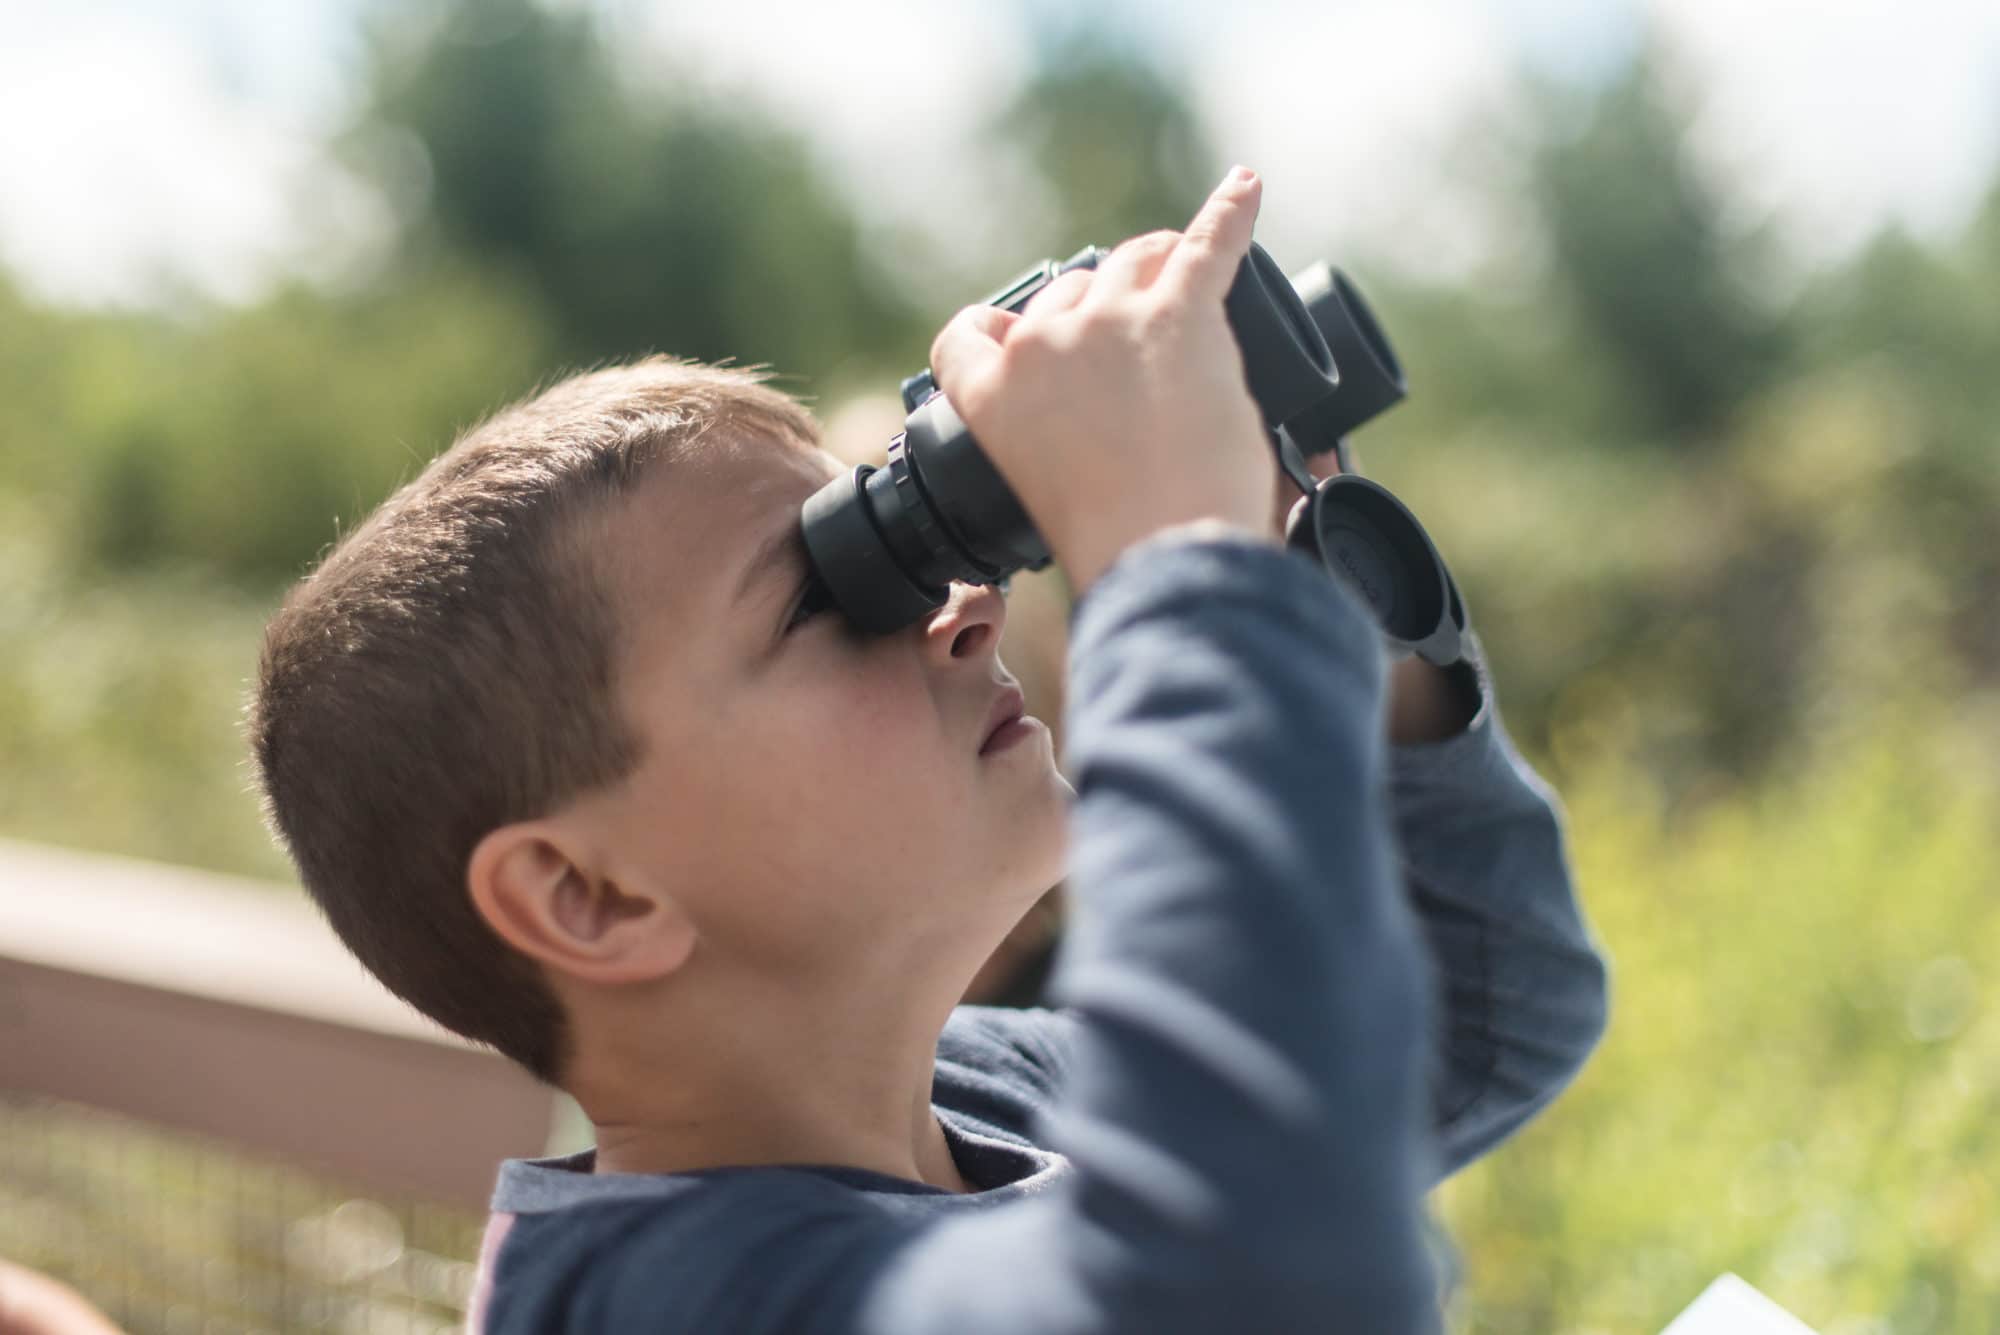 A boy peers through binoculars. (photo © Ben Conant)